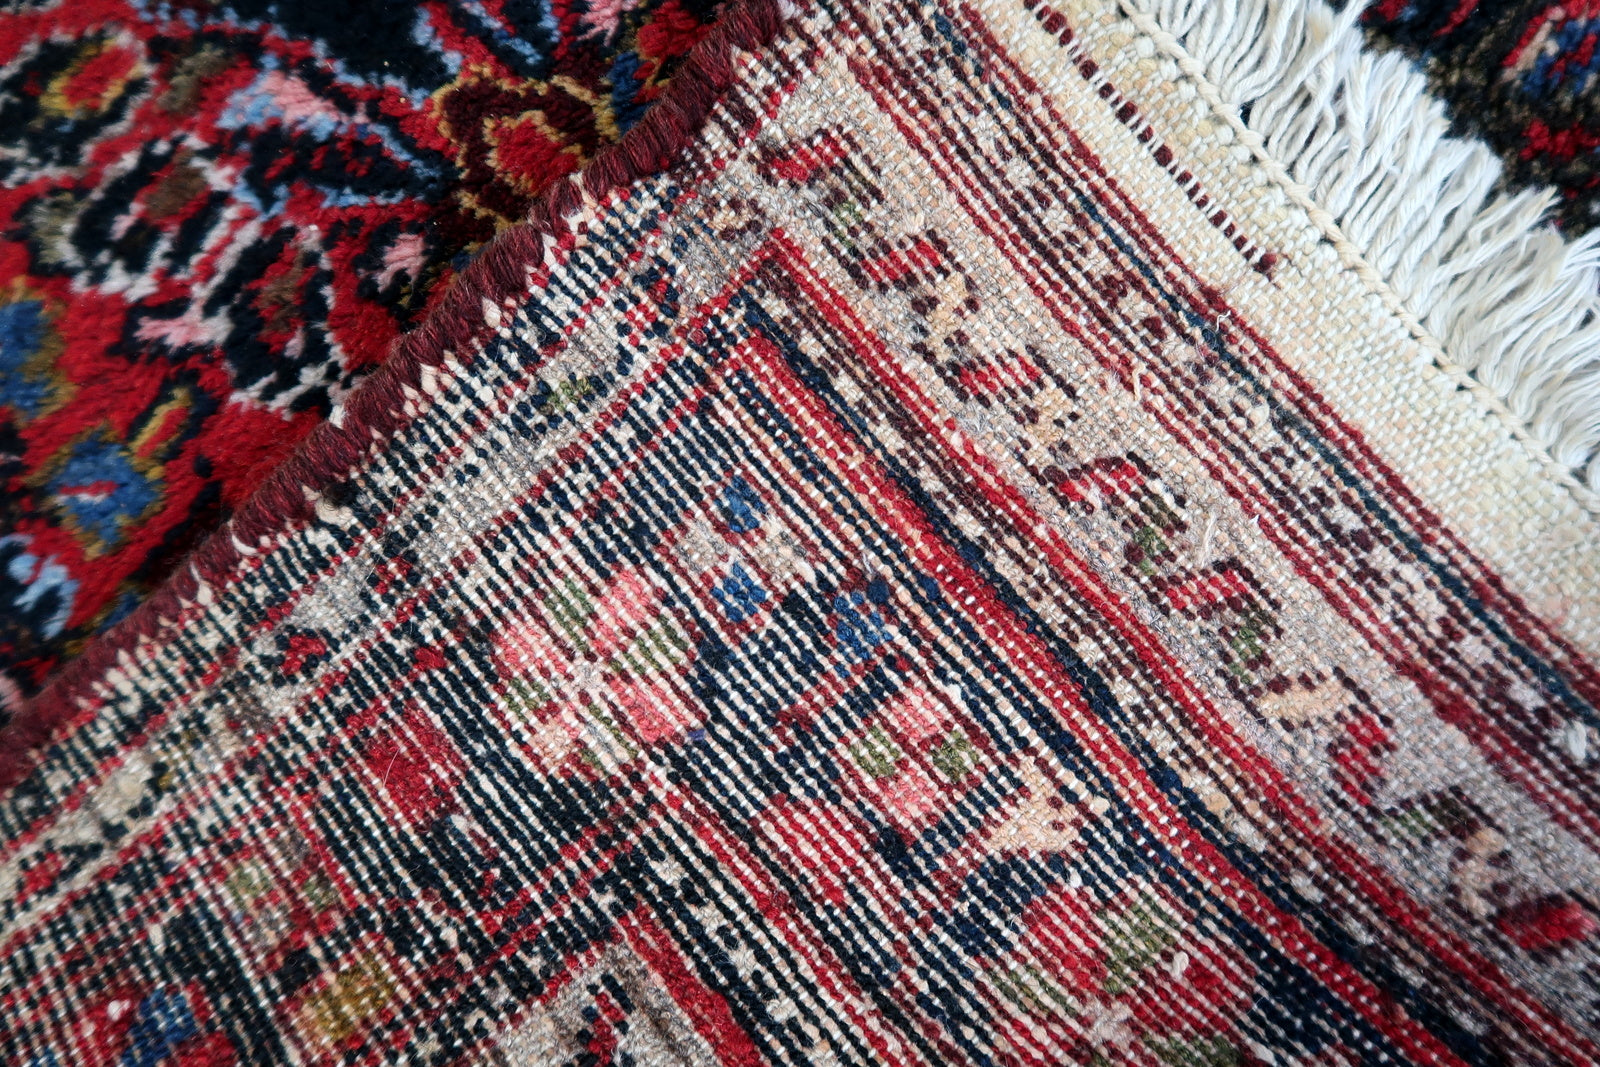 Reverse side of the Handmade Vintage Persian Style Sarouk Runner Rug.